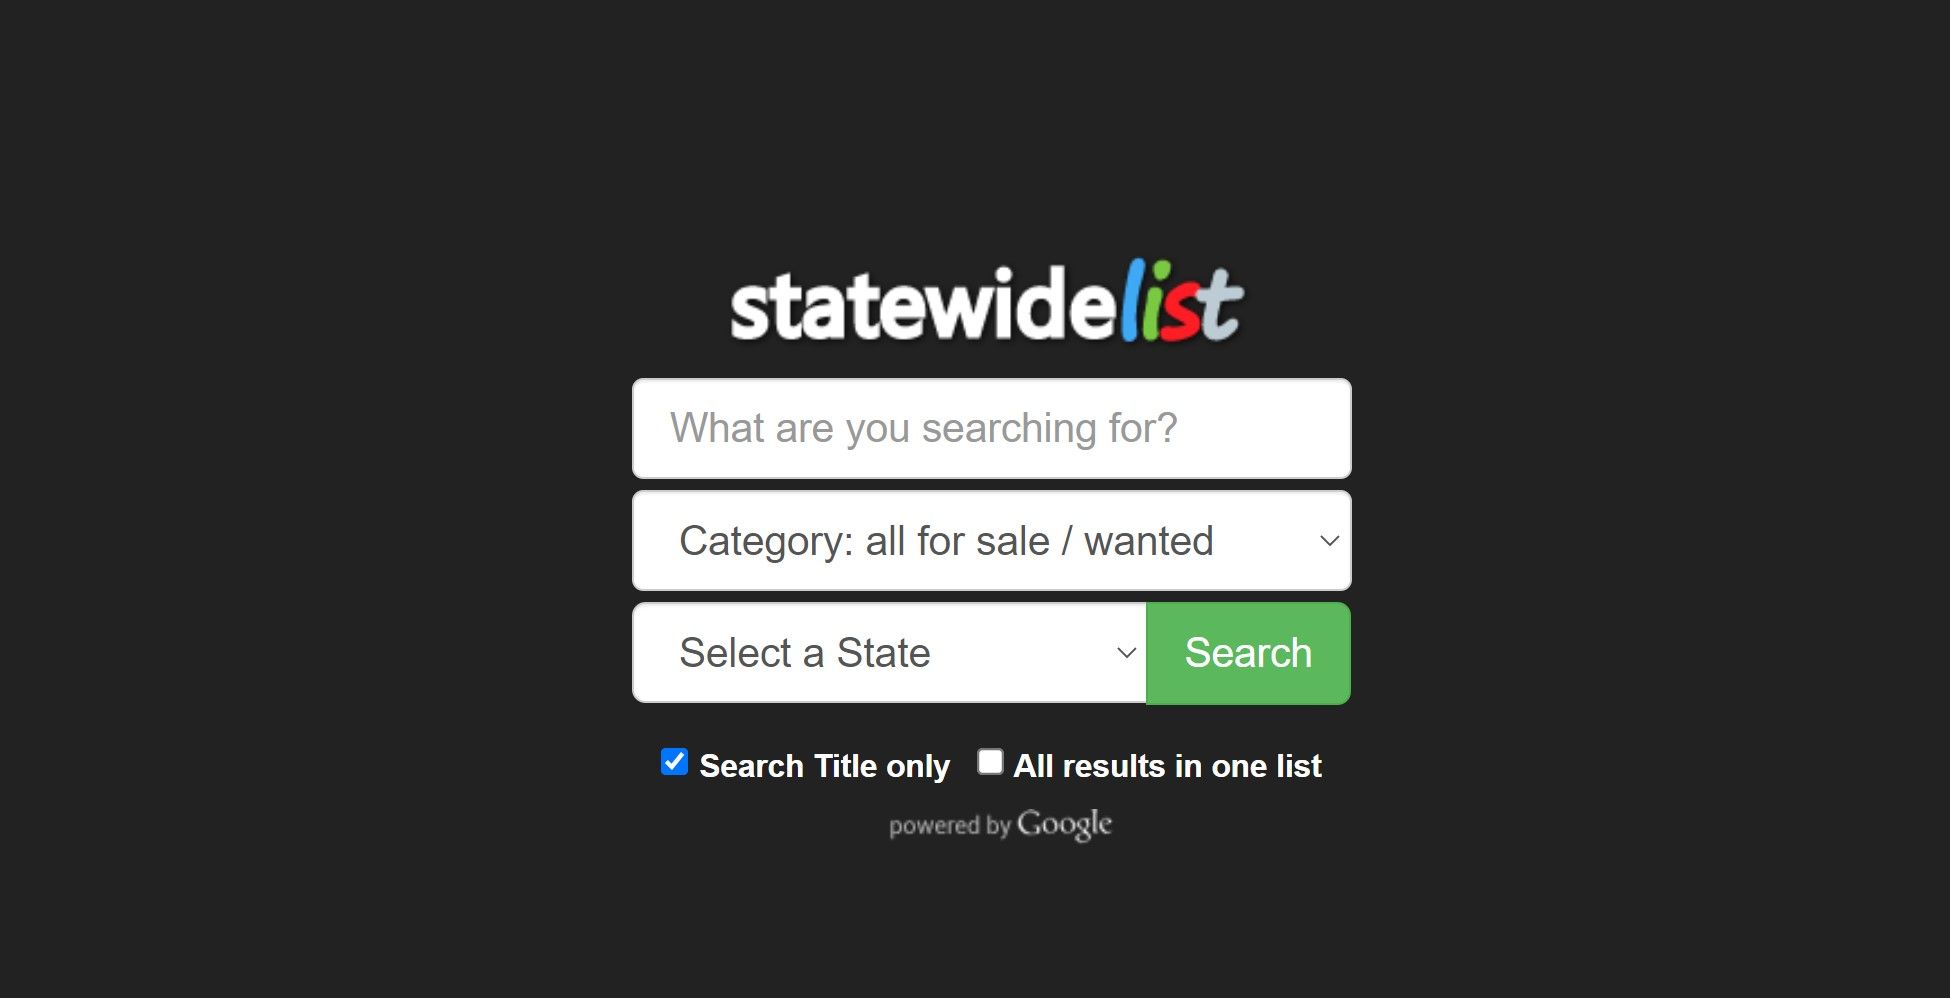 Statewidelist website landing page